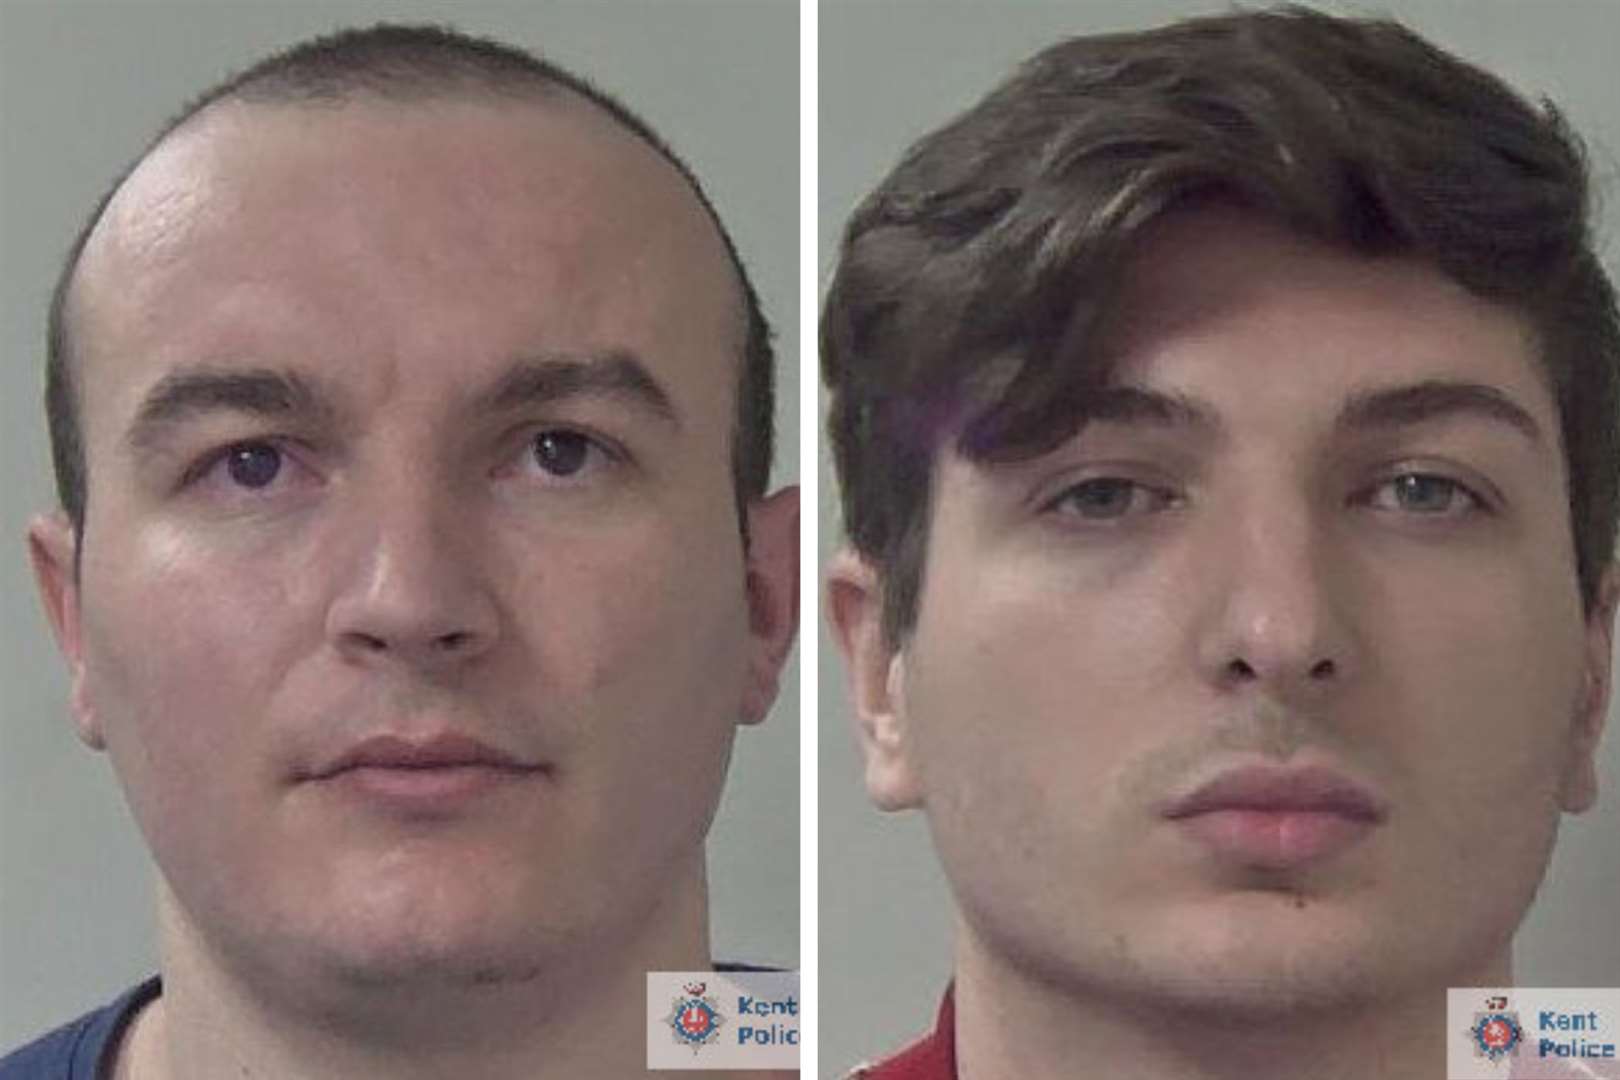 Edison Cifliku (L) and Amarildo Buzi (R) have been jailed. Photos: Kent Police